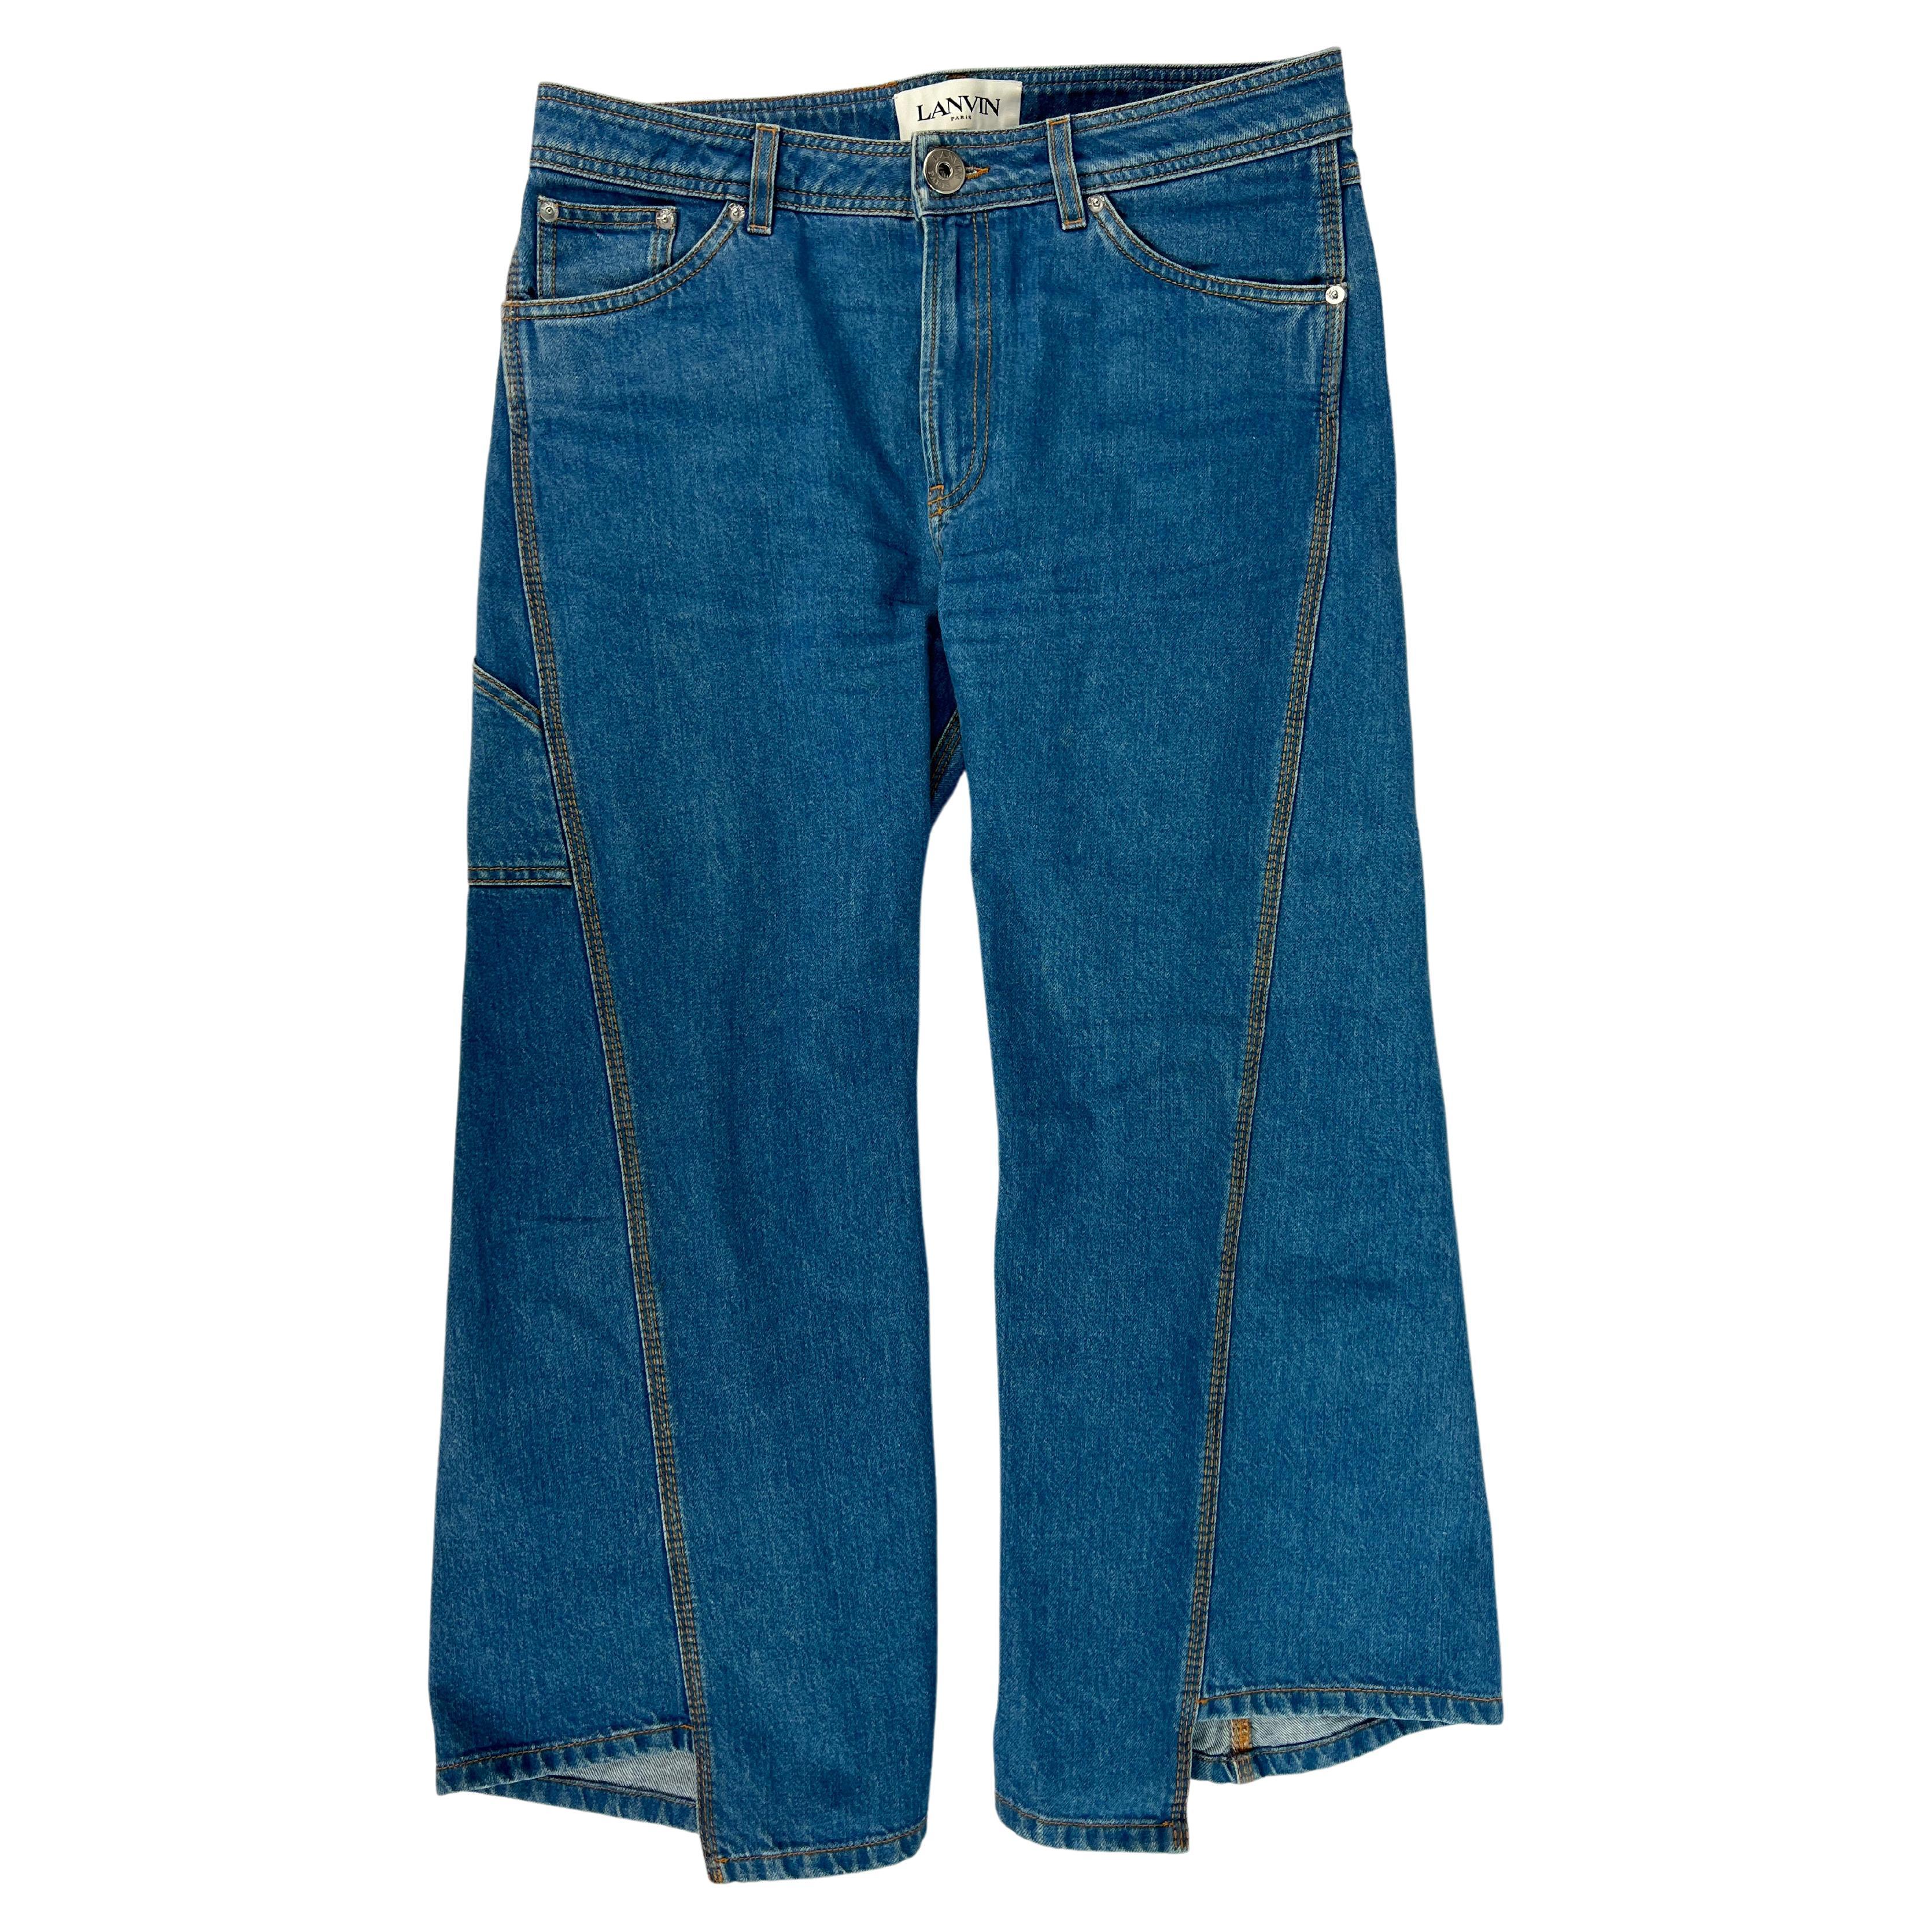 Lanvin Blue Denim Jean Pants, Size 40